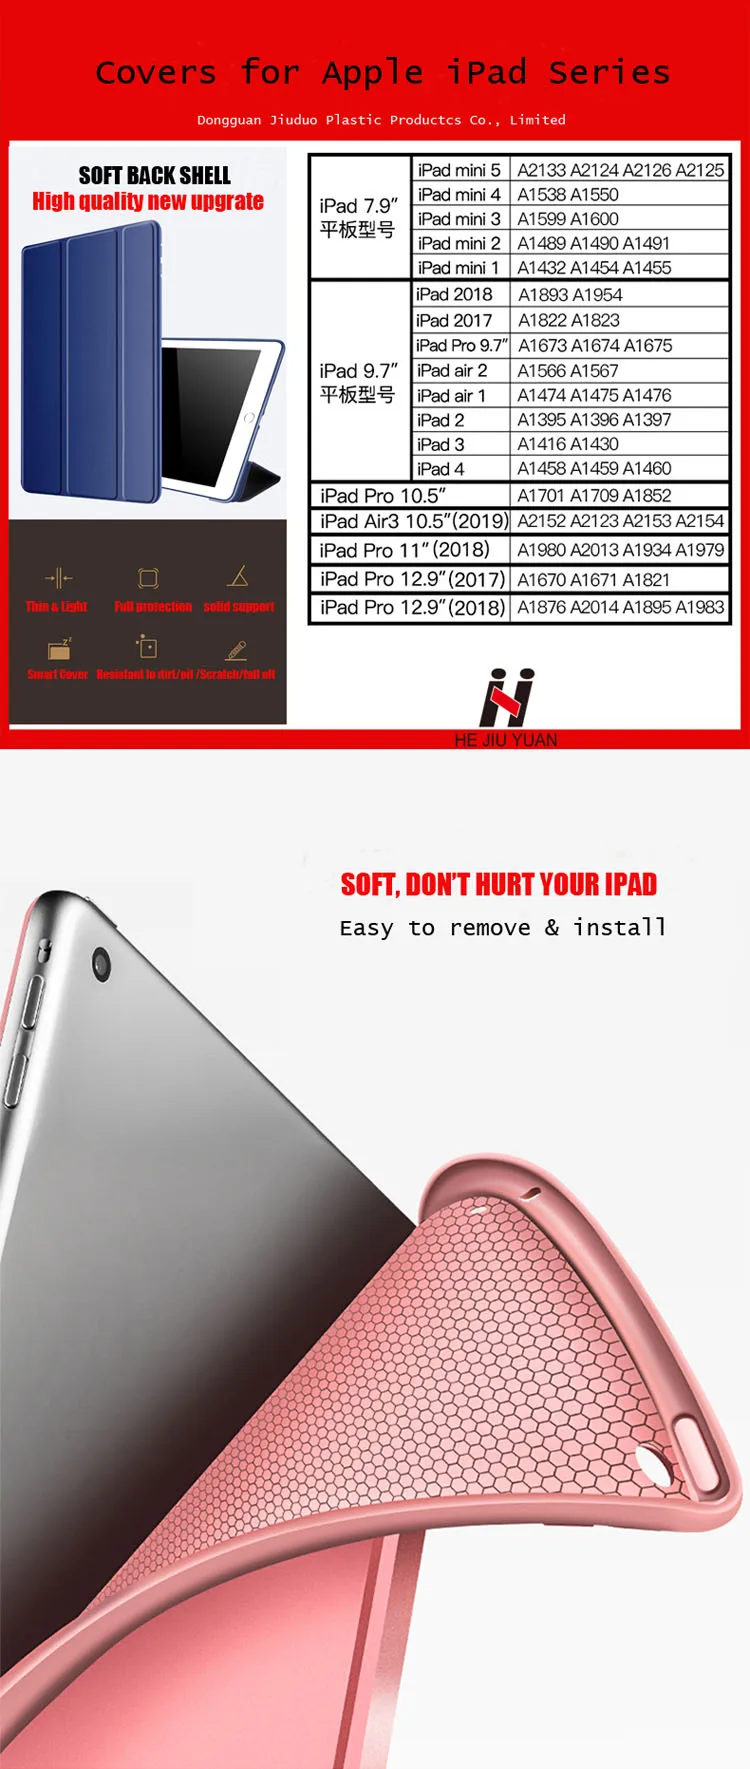 Custom Auto Sleep Wake Function Ultra Thin Pu Leather Tablet case For Apple iPad Pro 11 iPad Case